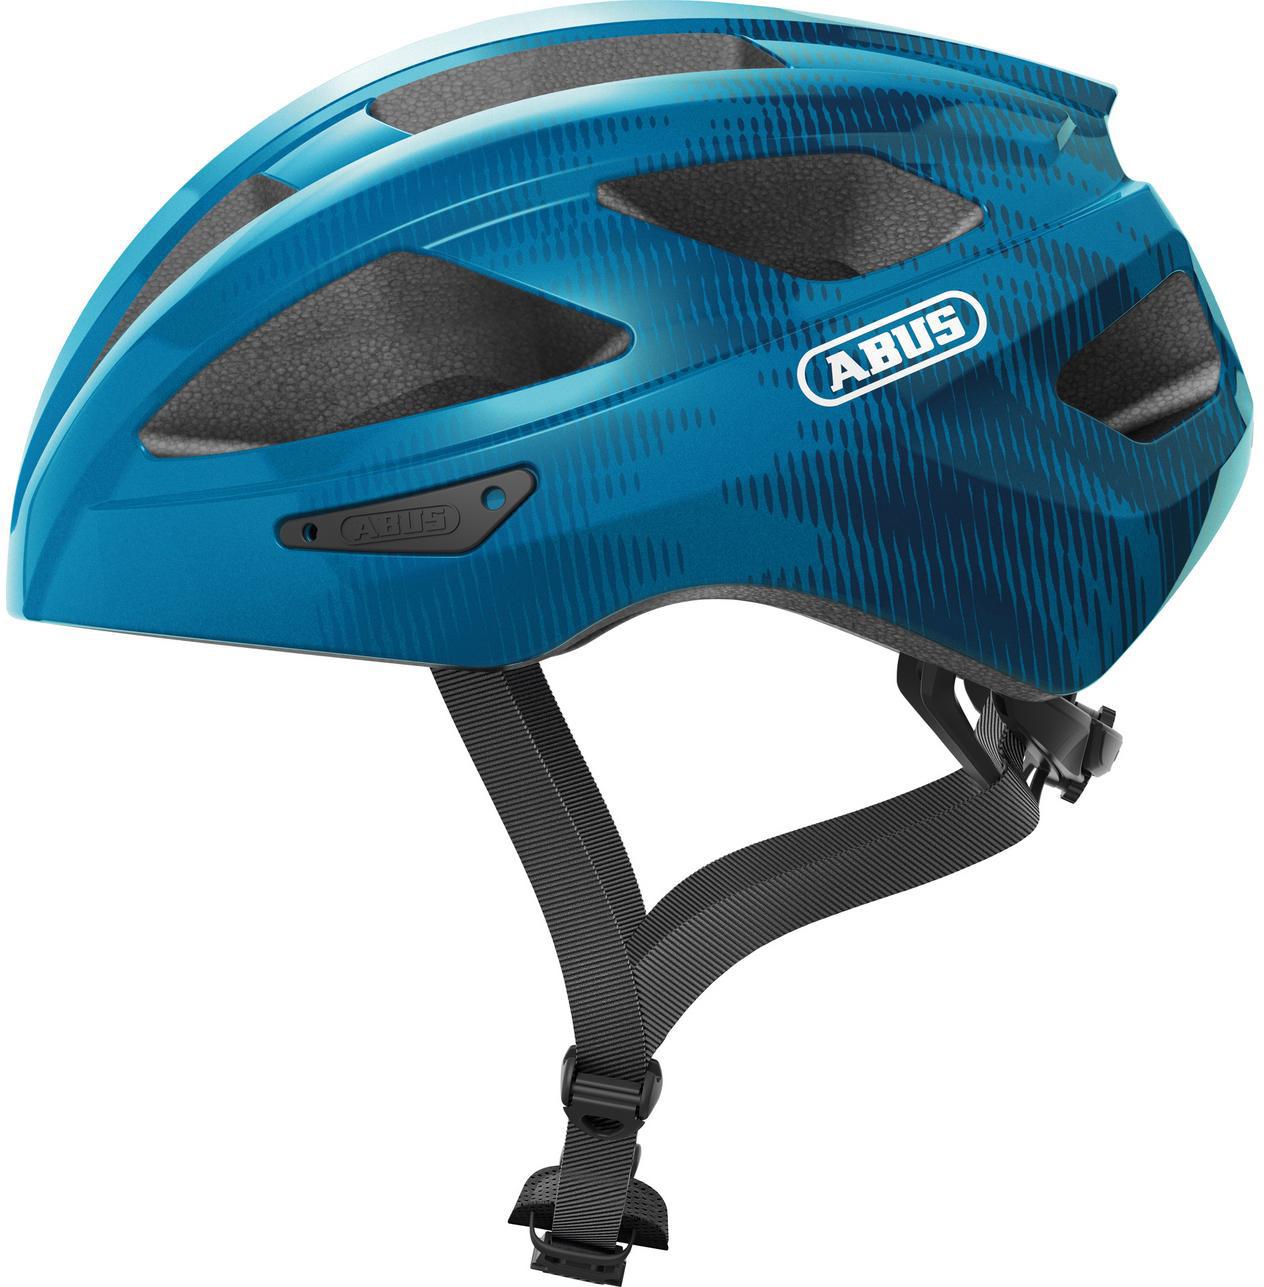 Abus Macator Road Cycling Helmet - Blue